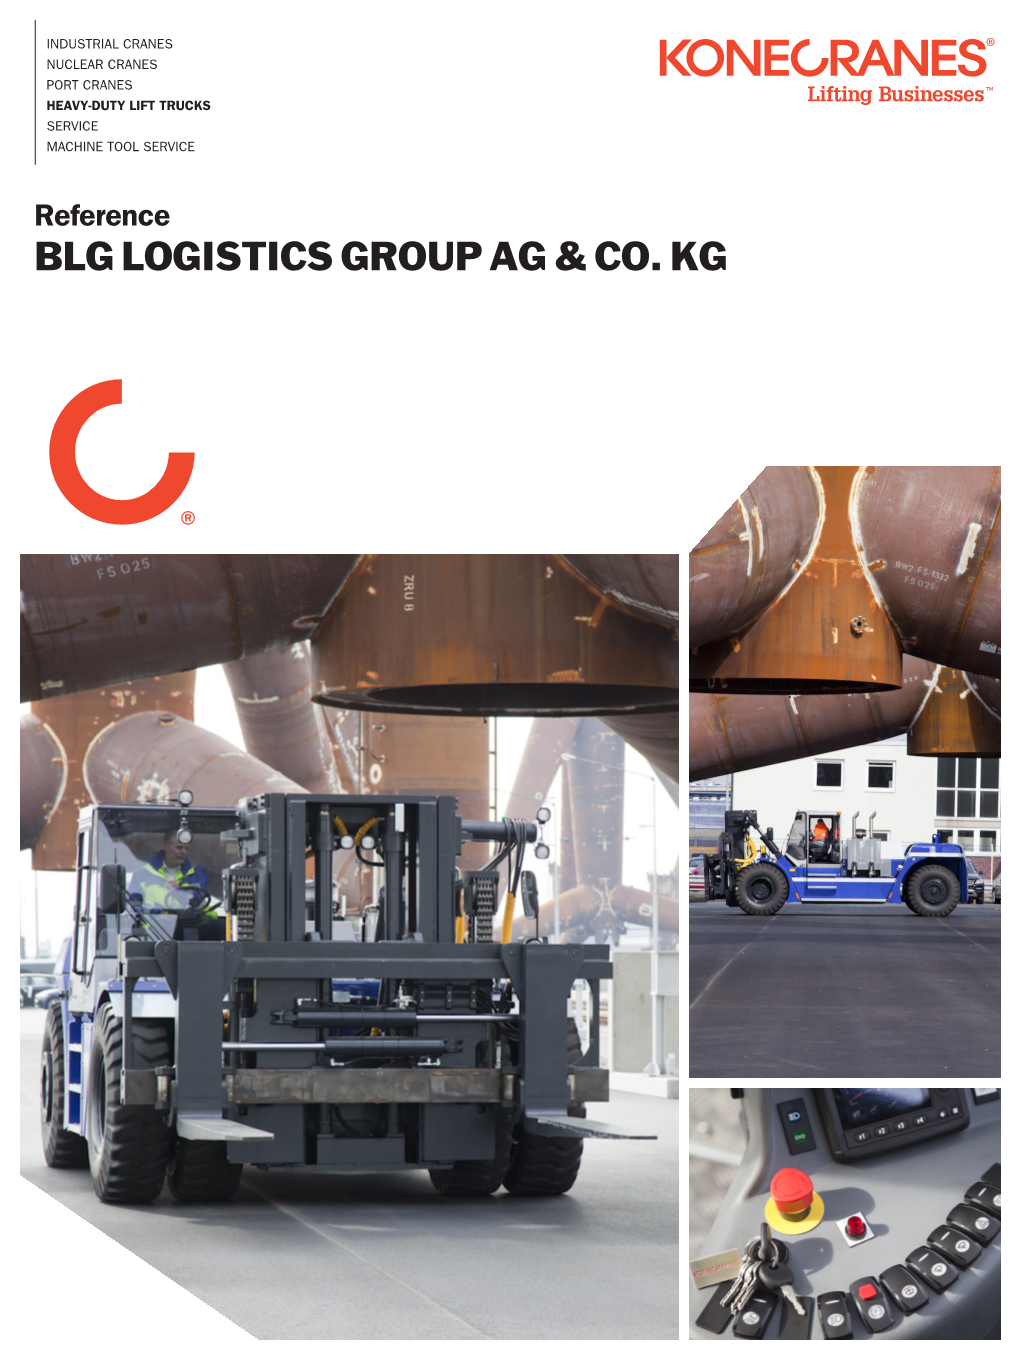 BLG LOGISTICS GROUP AG & CO. KG Customer Reference